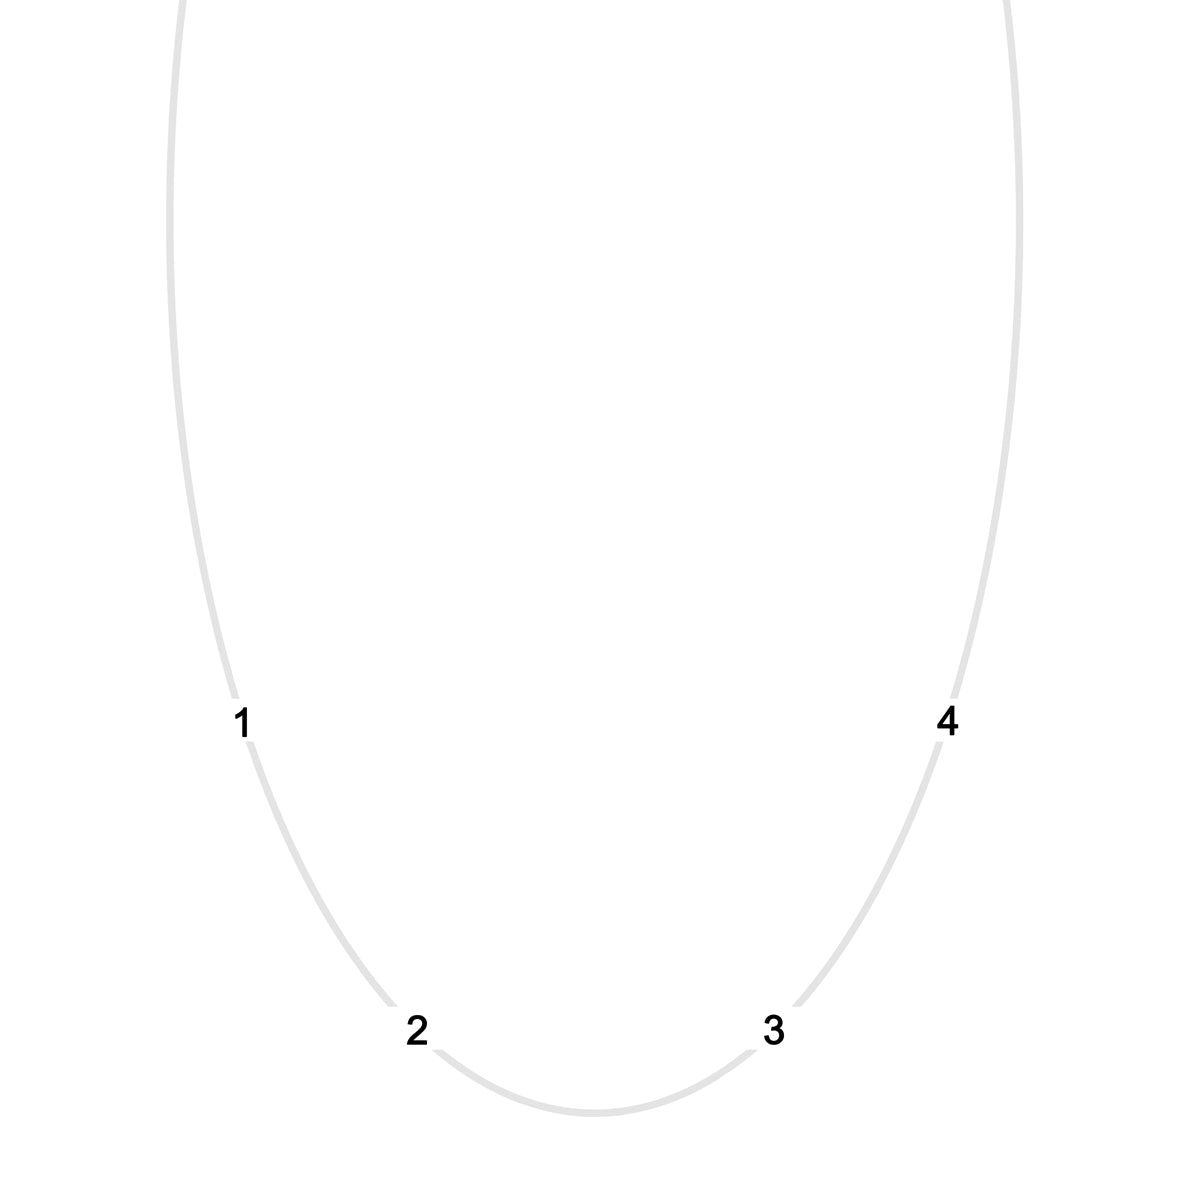 4 gold_initial letter necklace illustration_1b62c1c4 2a12 44f8 966a b2c69c41da81